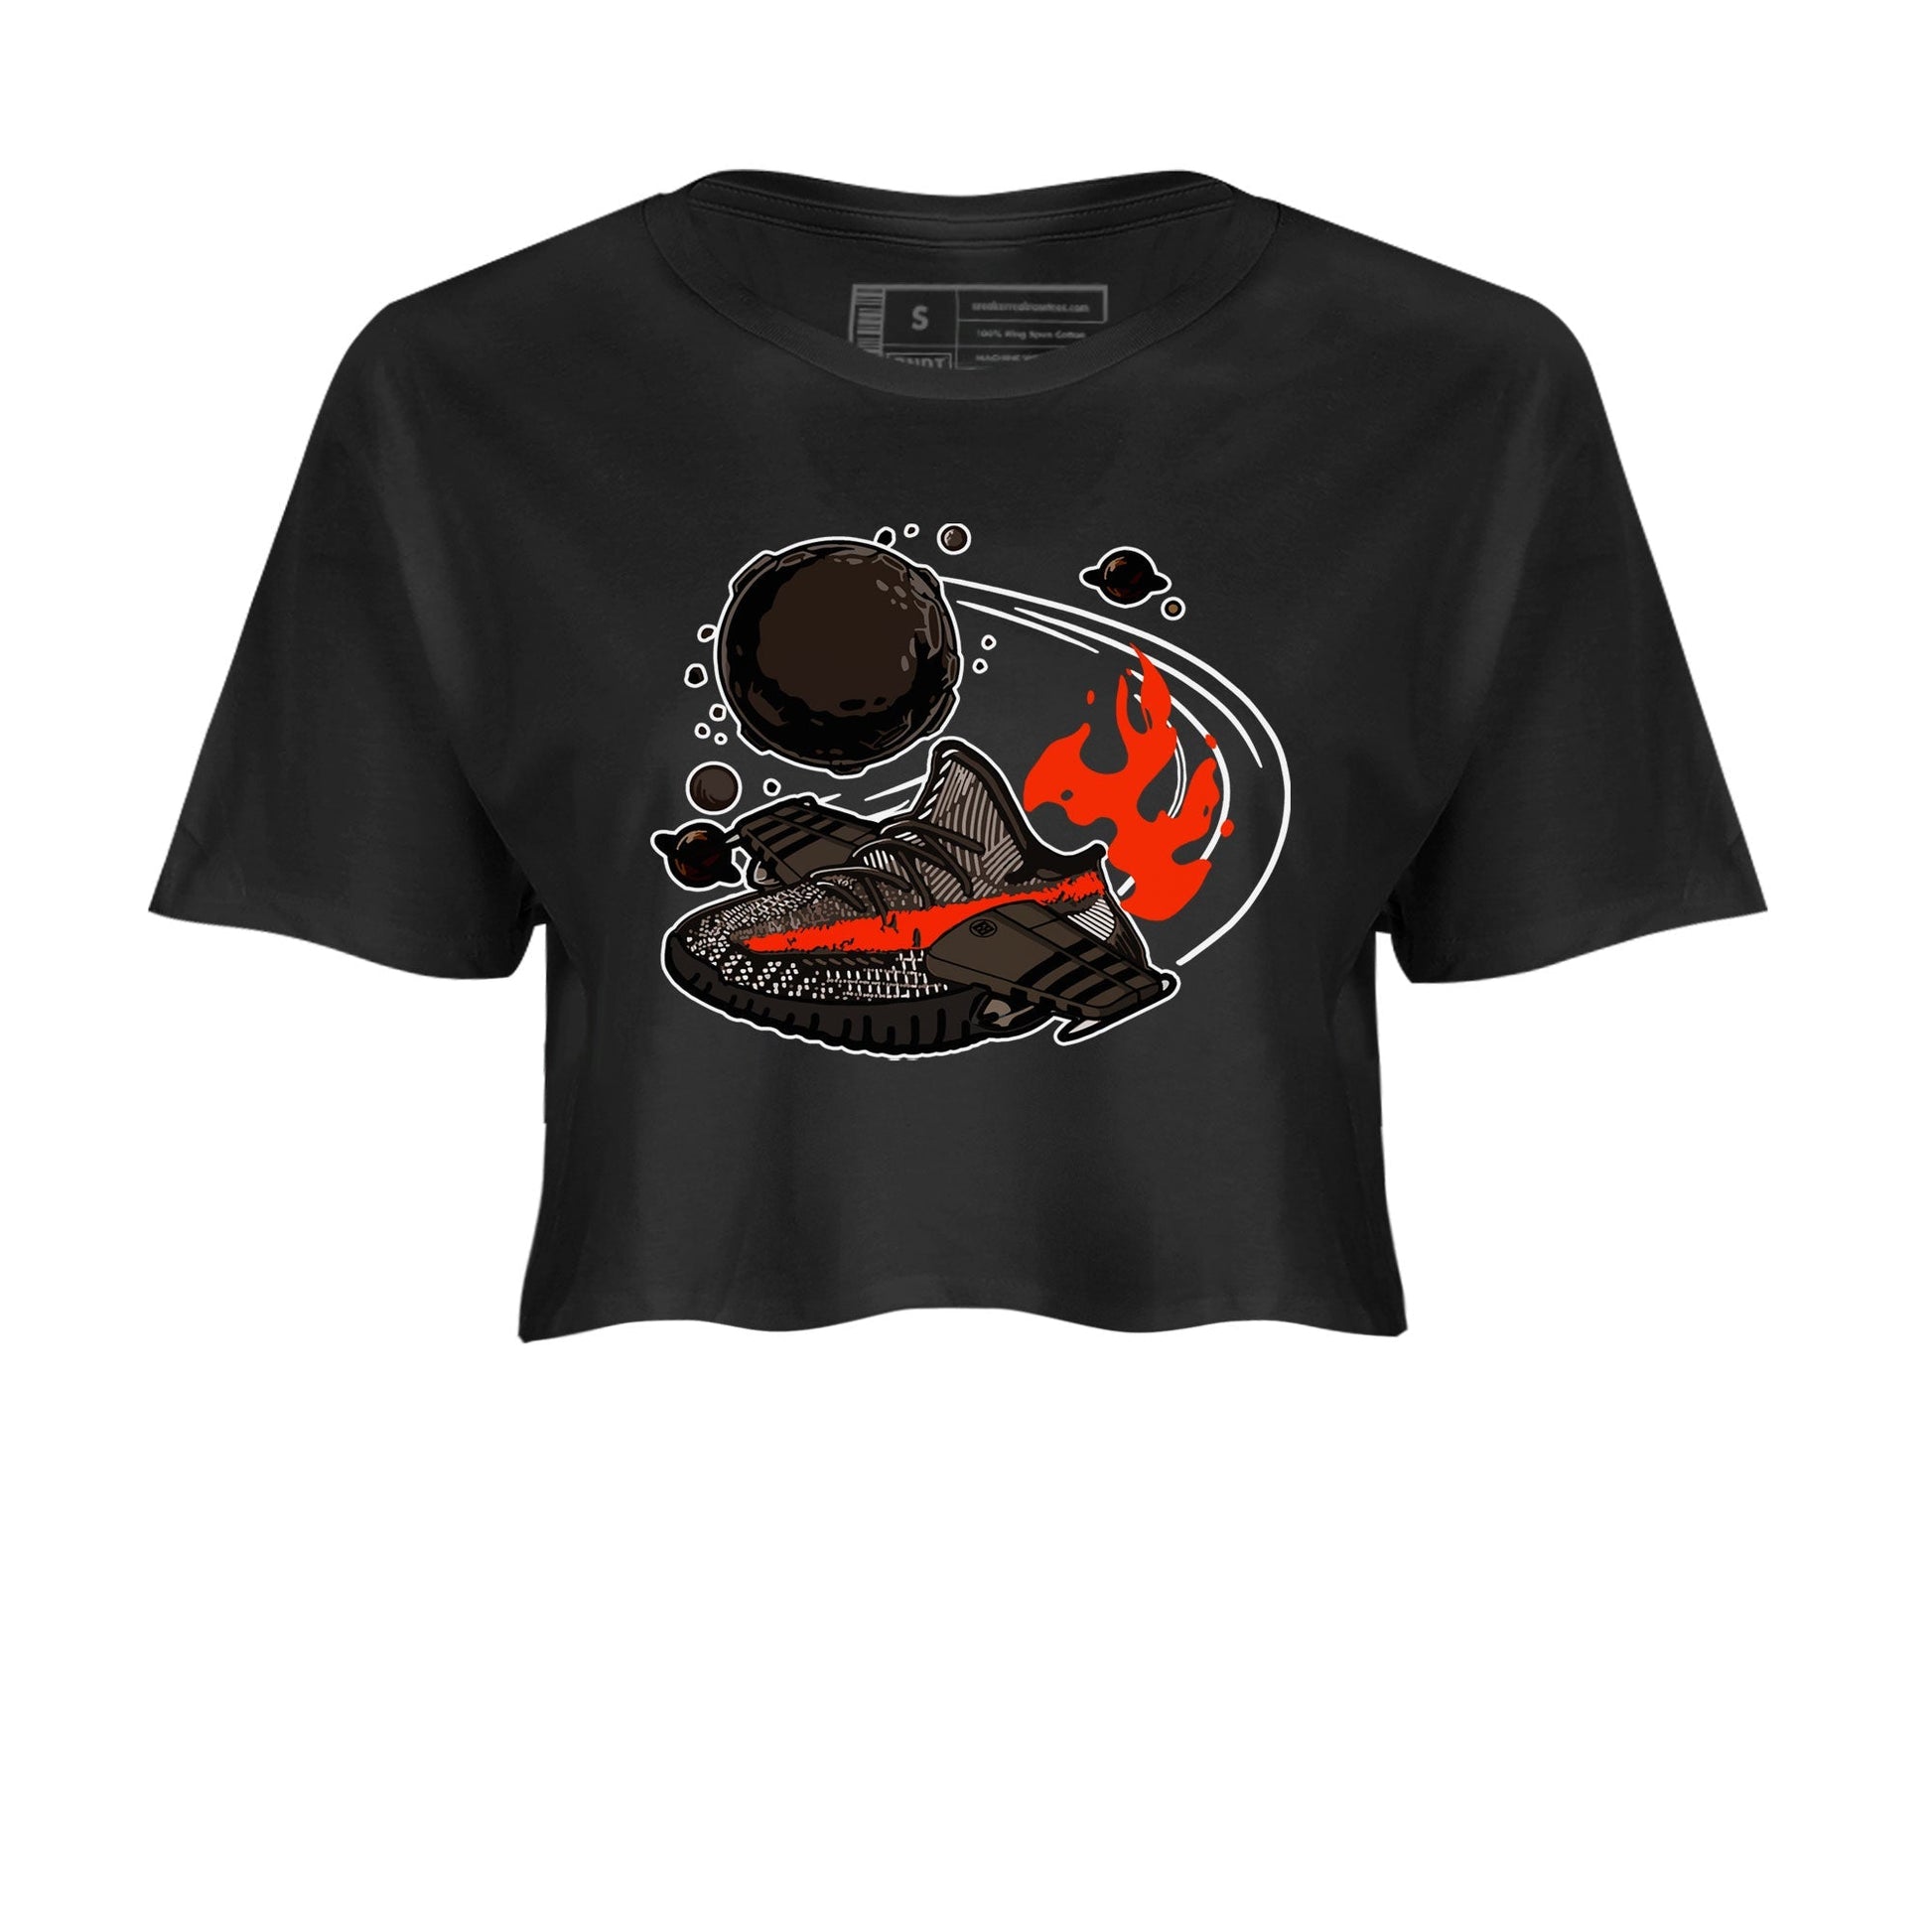 Yeezy 350 Carbon Beluga shirt to match sneakers Rocket Boost Streetwear Sneaker Shirt Yeezy Boost 350 V2 Carbon Beluga Drip Gear Zone Sneaker Matching Clothing Black 2 Crop T-Shirt